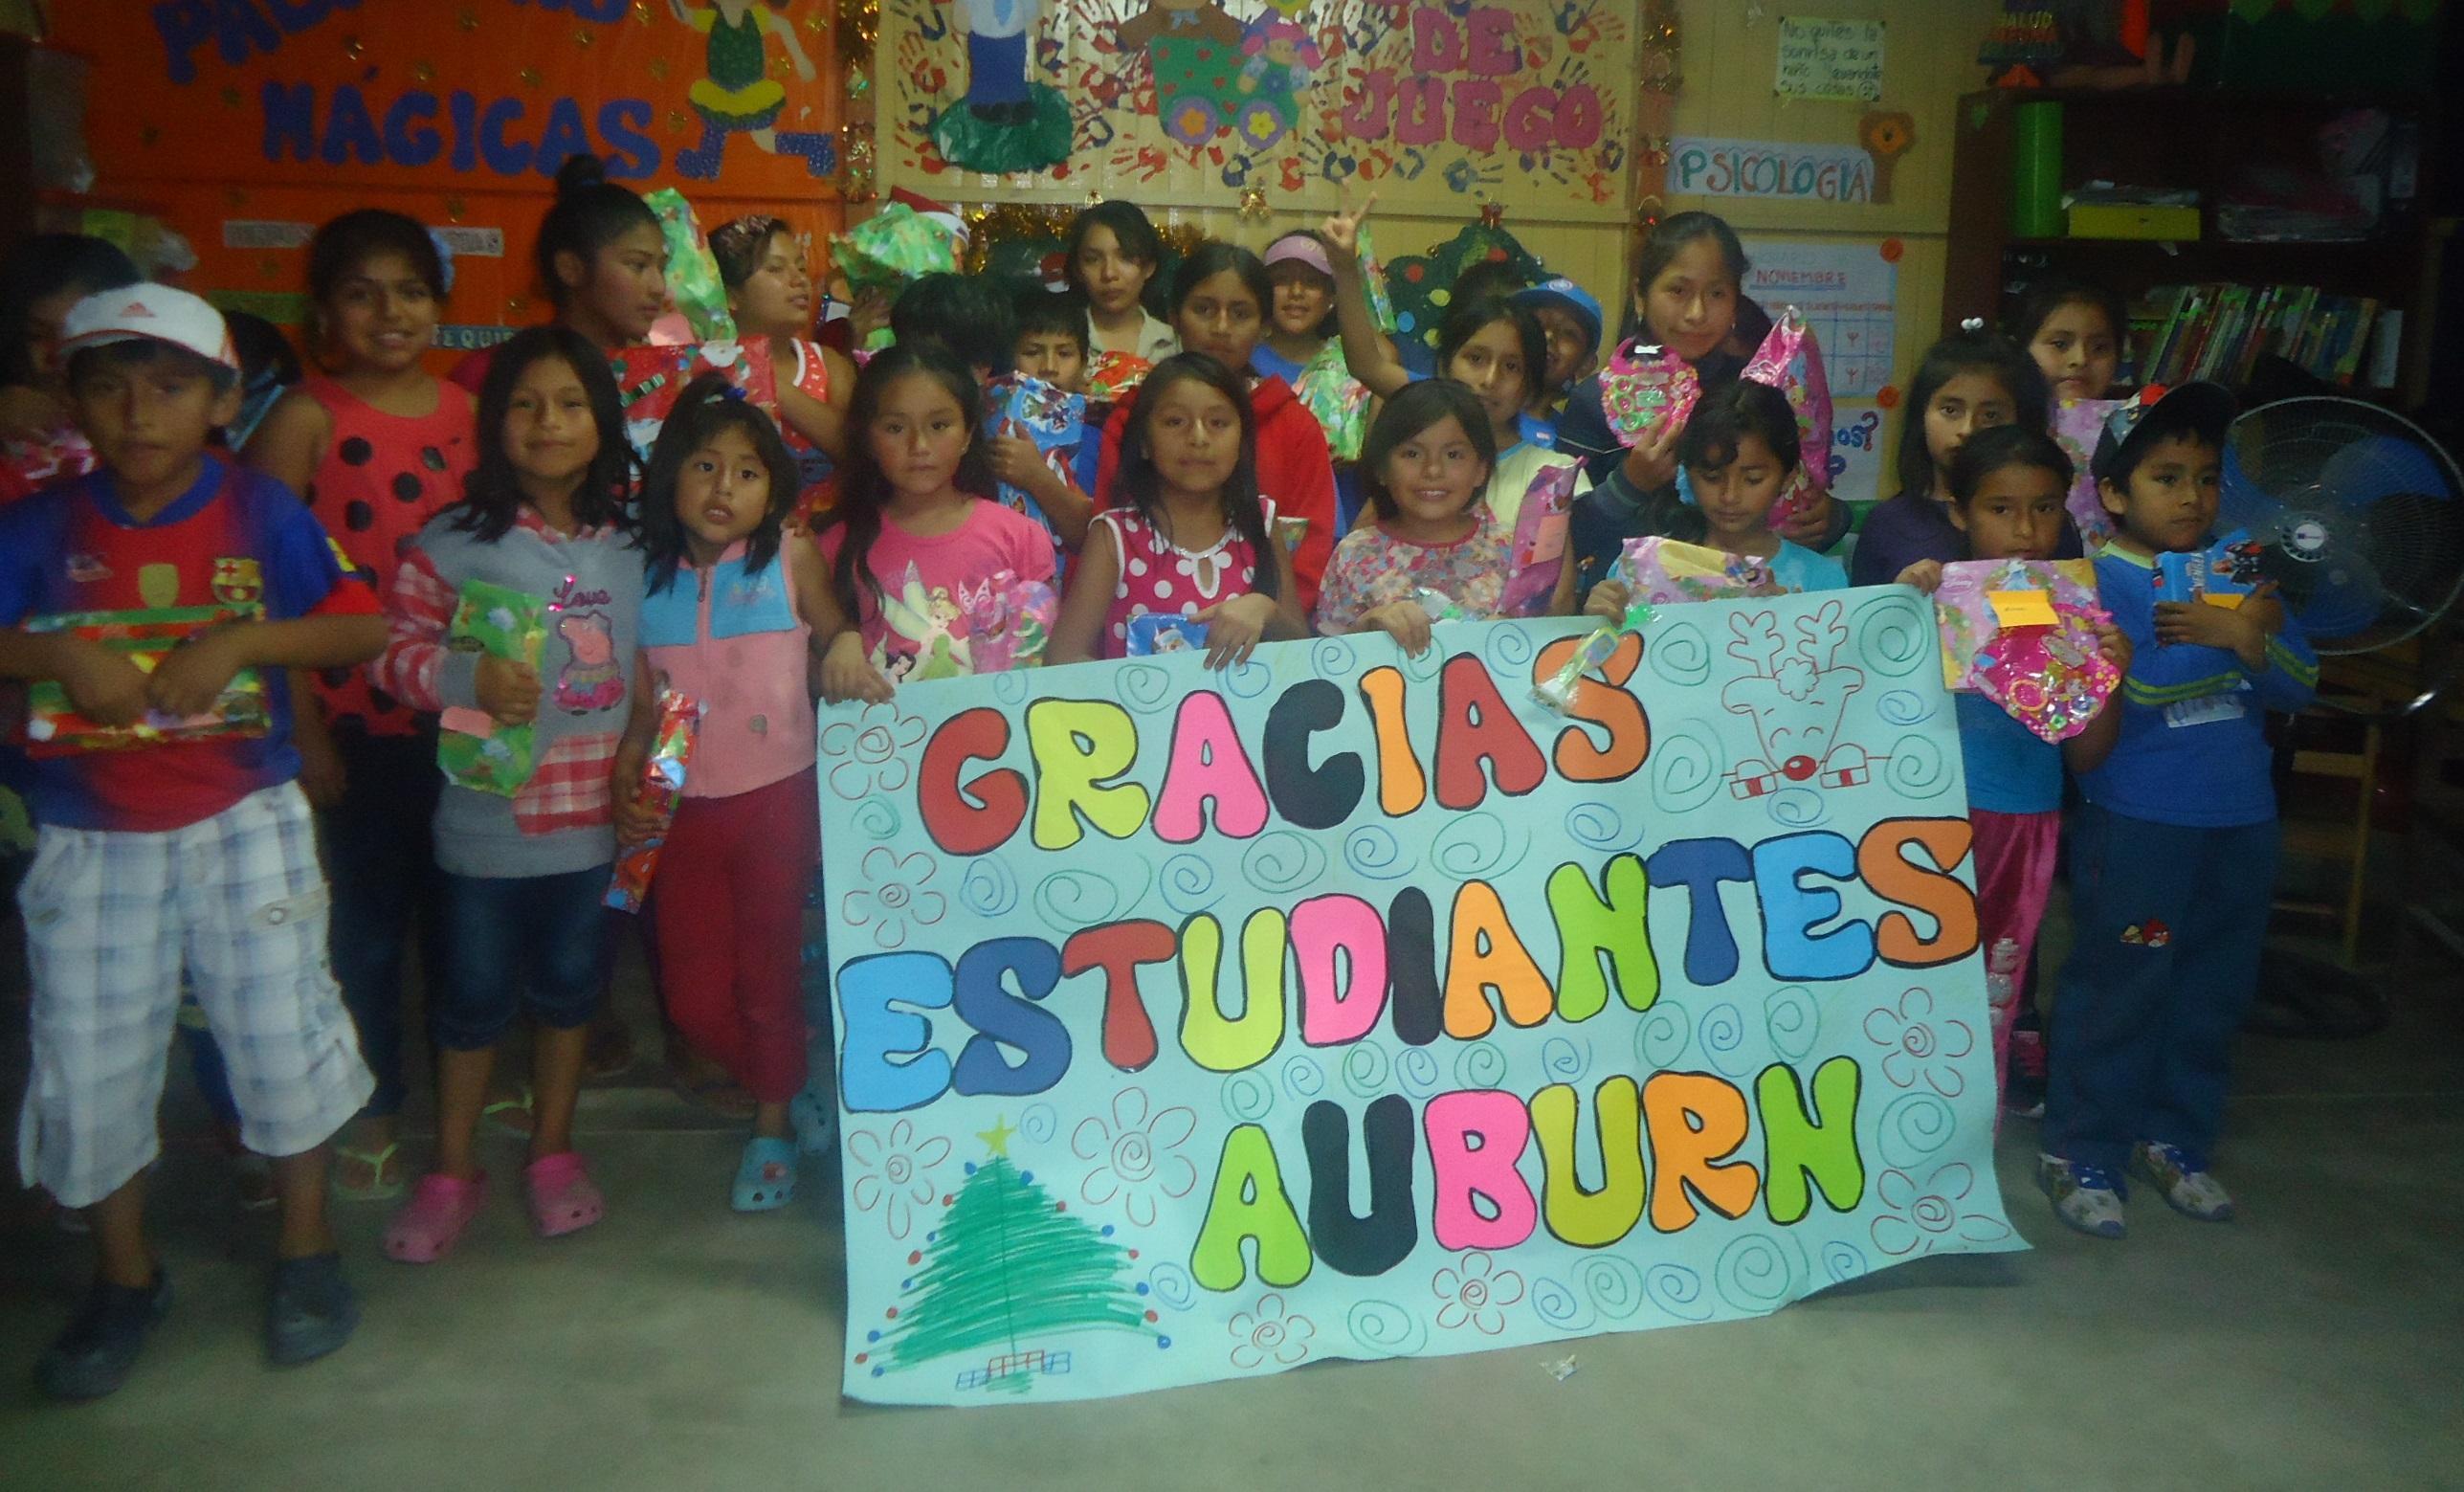 MAcc students volunteered at a school in Peru